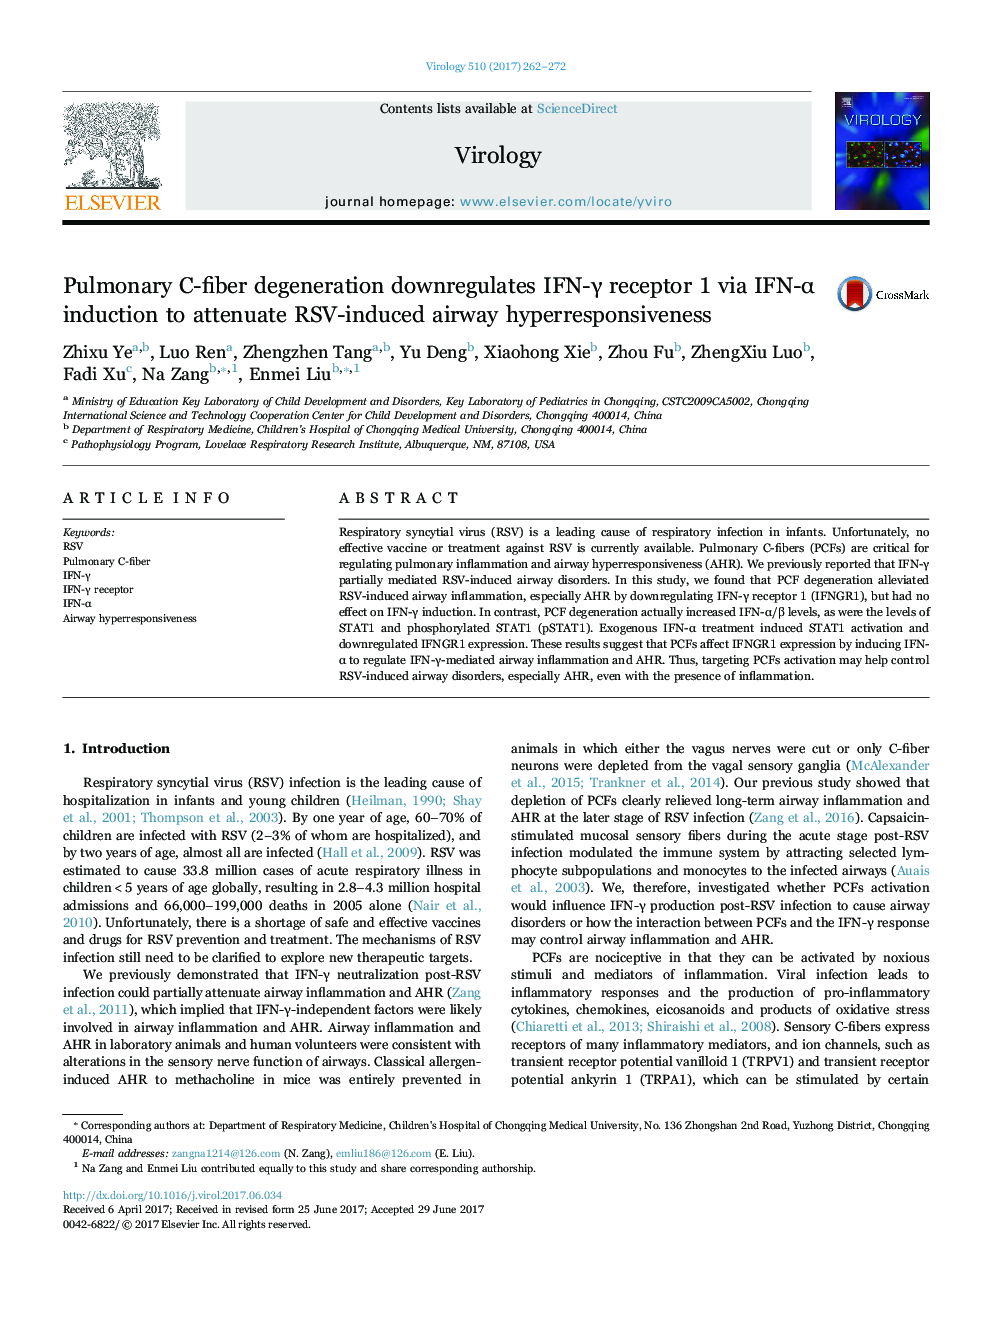 Pulmonary C-fiber degeneration downregulates IFN-Î³ receptor 1 via IFN-Î± induction to attenuate RSV-induced airway hyperresponsiveness